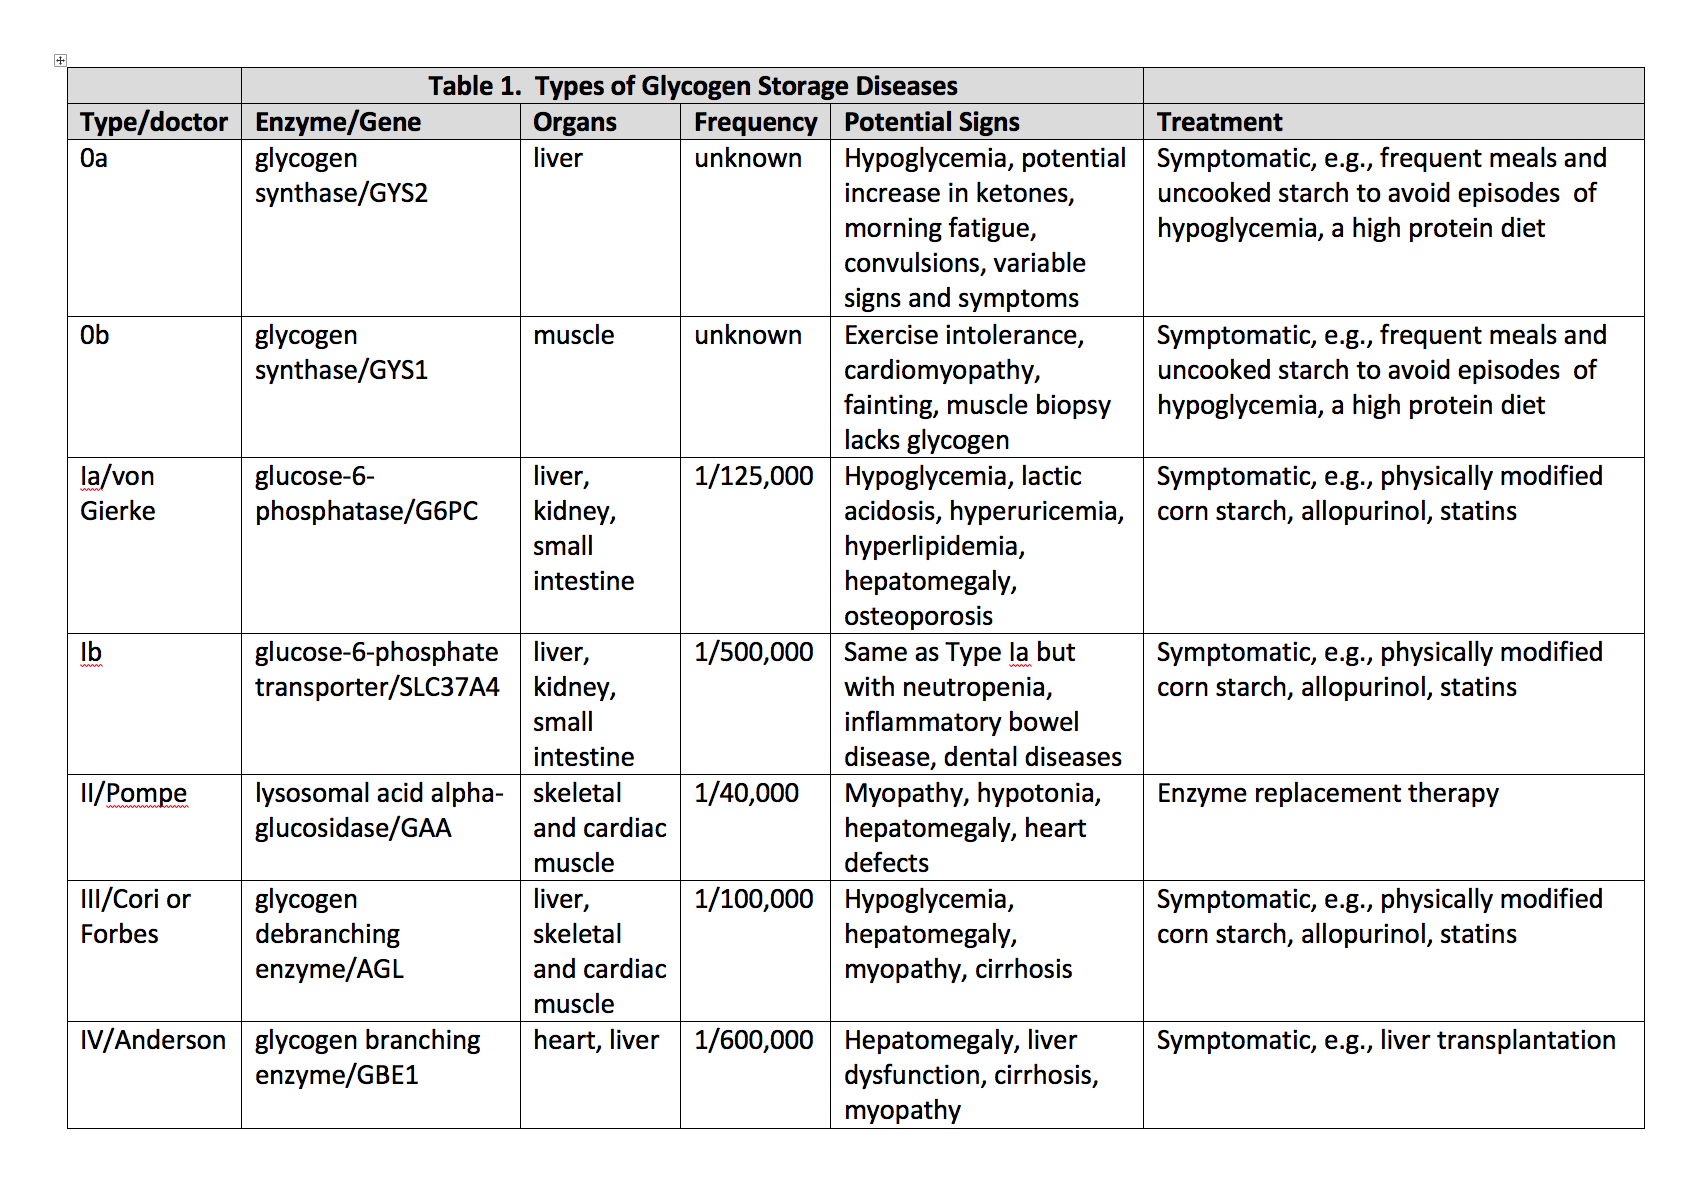 Types of glycogen storage diseases